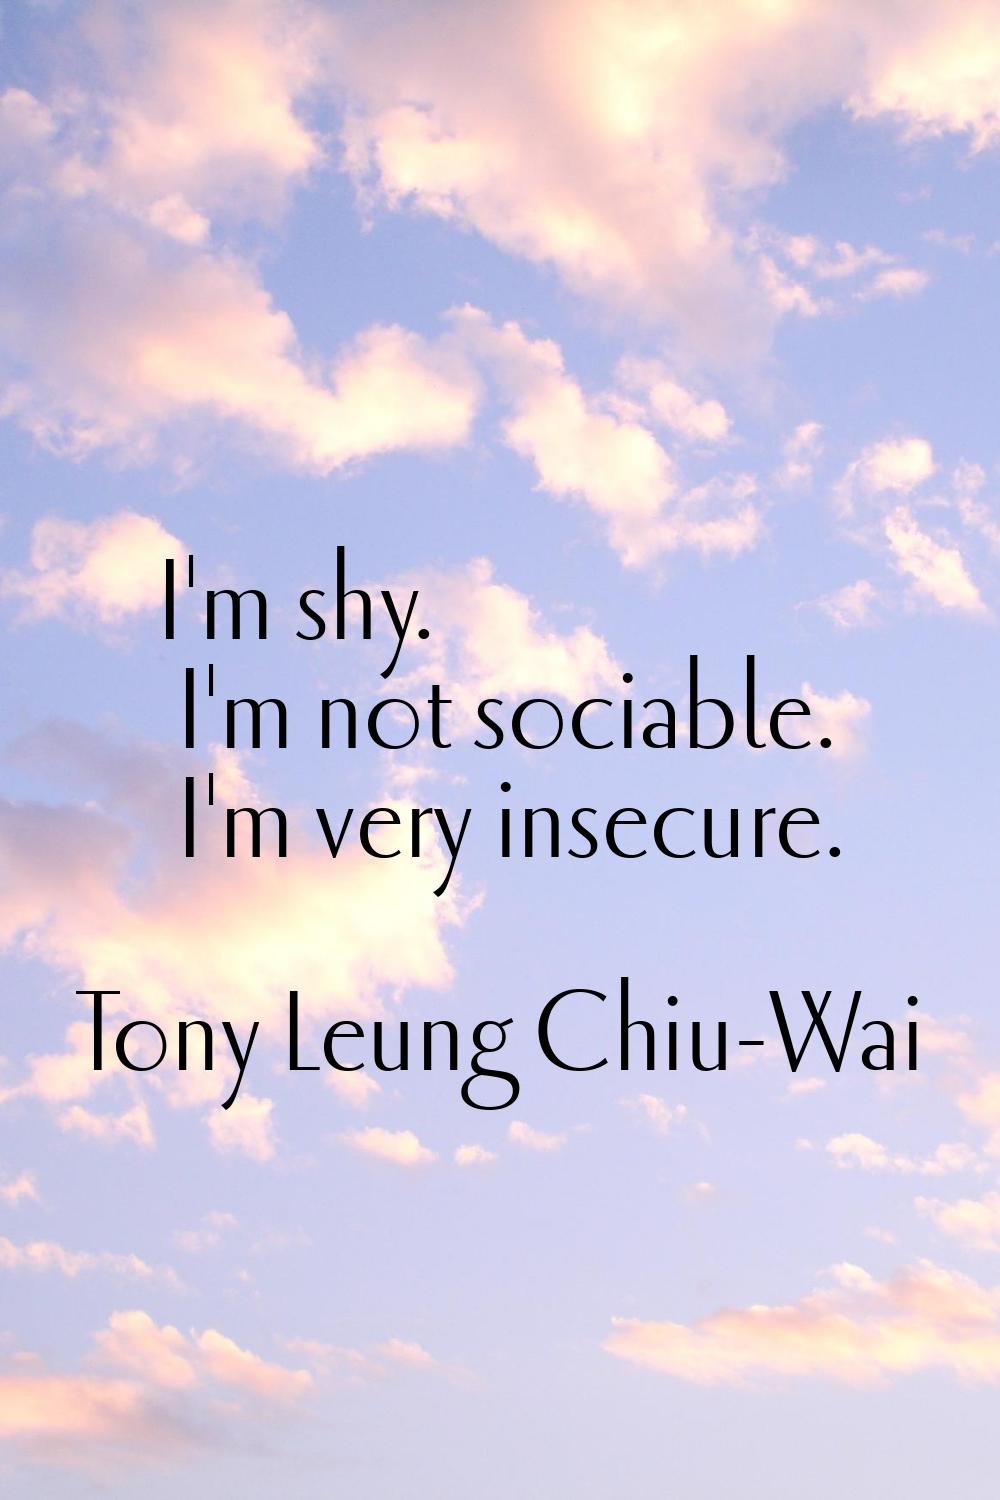 I'm shy. I'm not sociable. I'm very insecure.